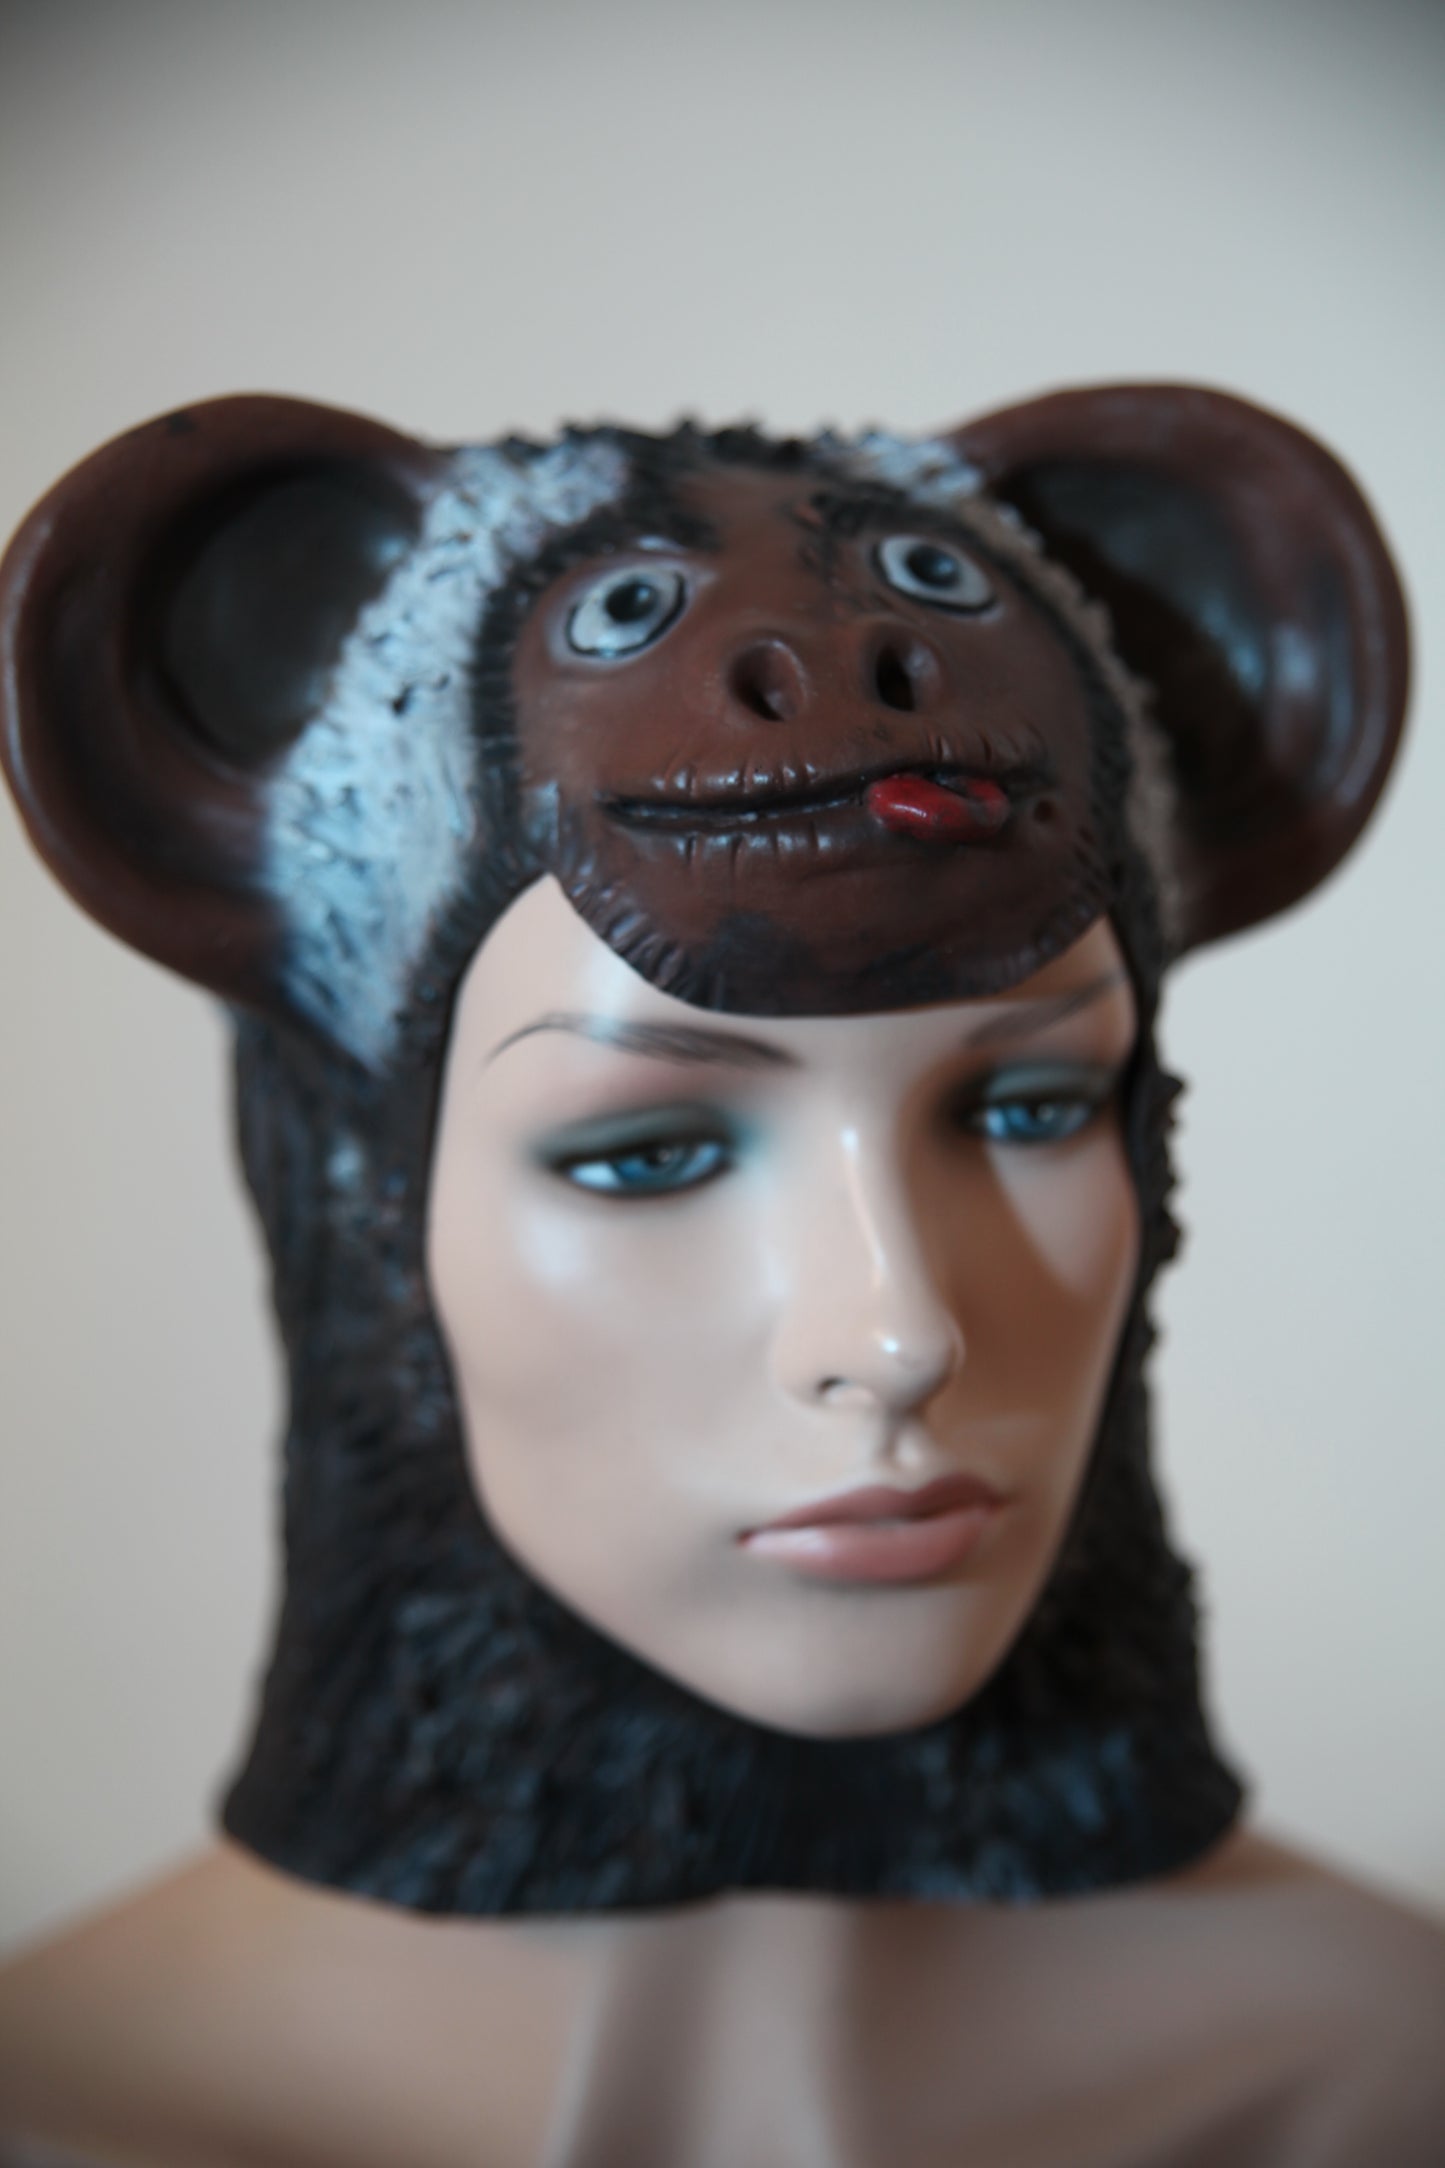 Kids Animal Latex Face Mask - Bush Baby Monkey (C134K)